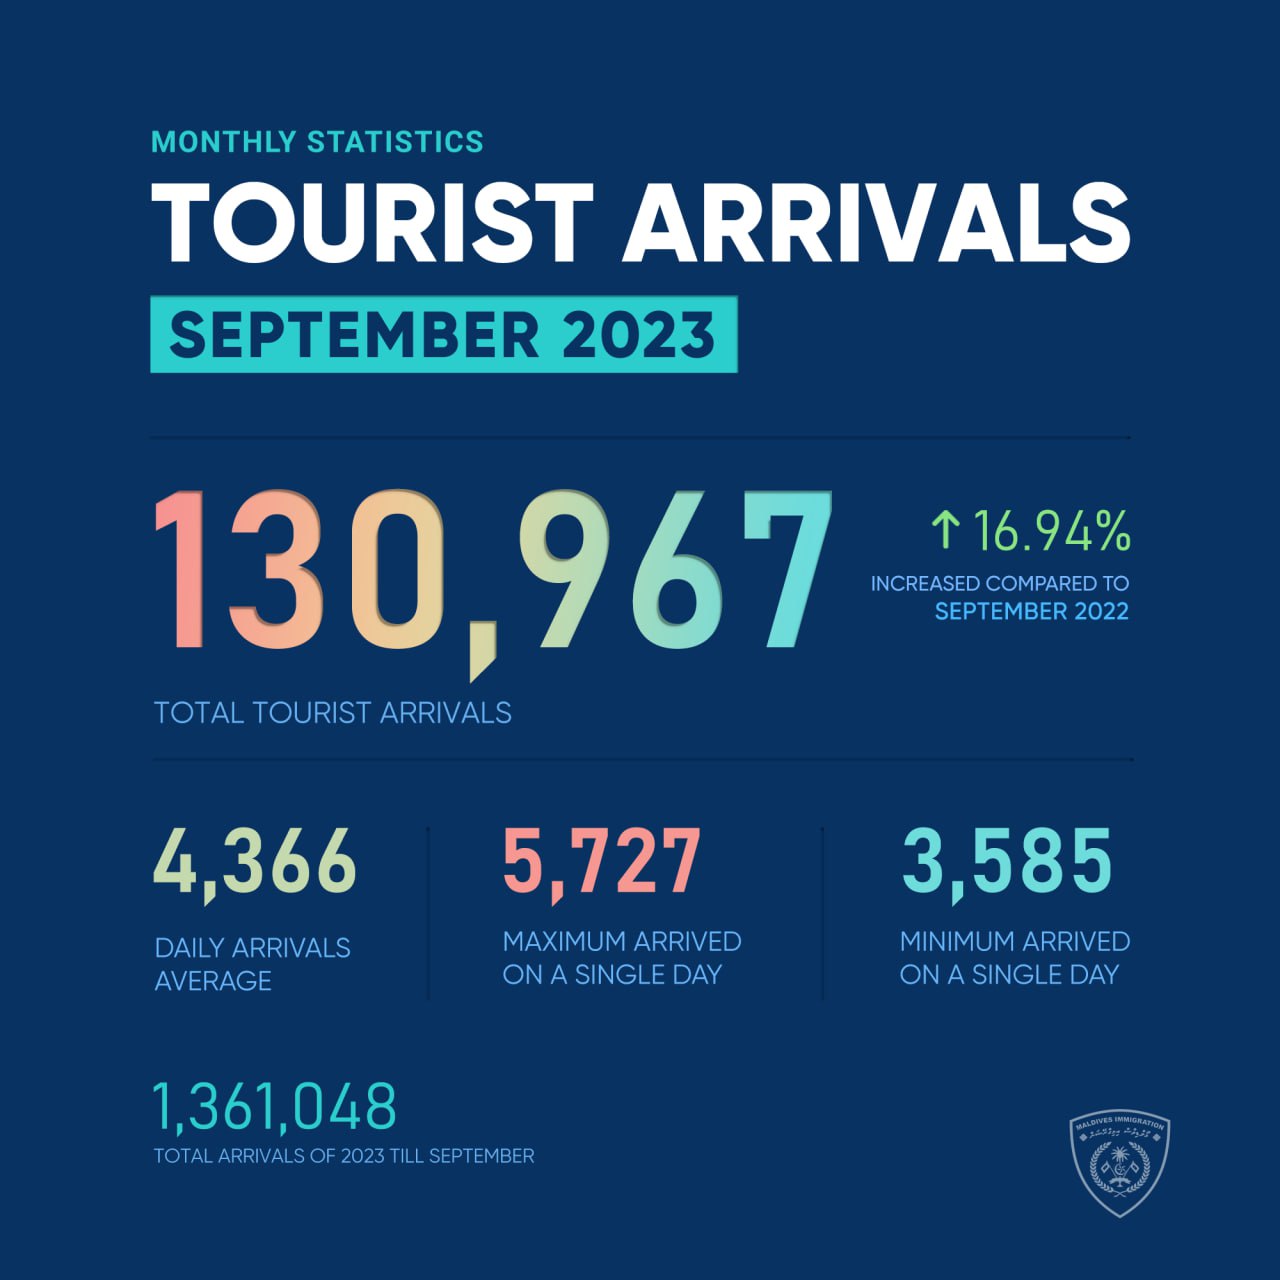 tourist arrivals to maldives 2023